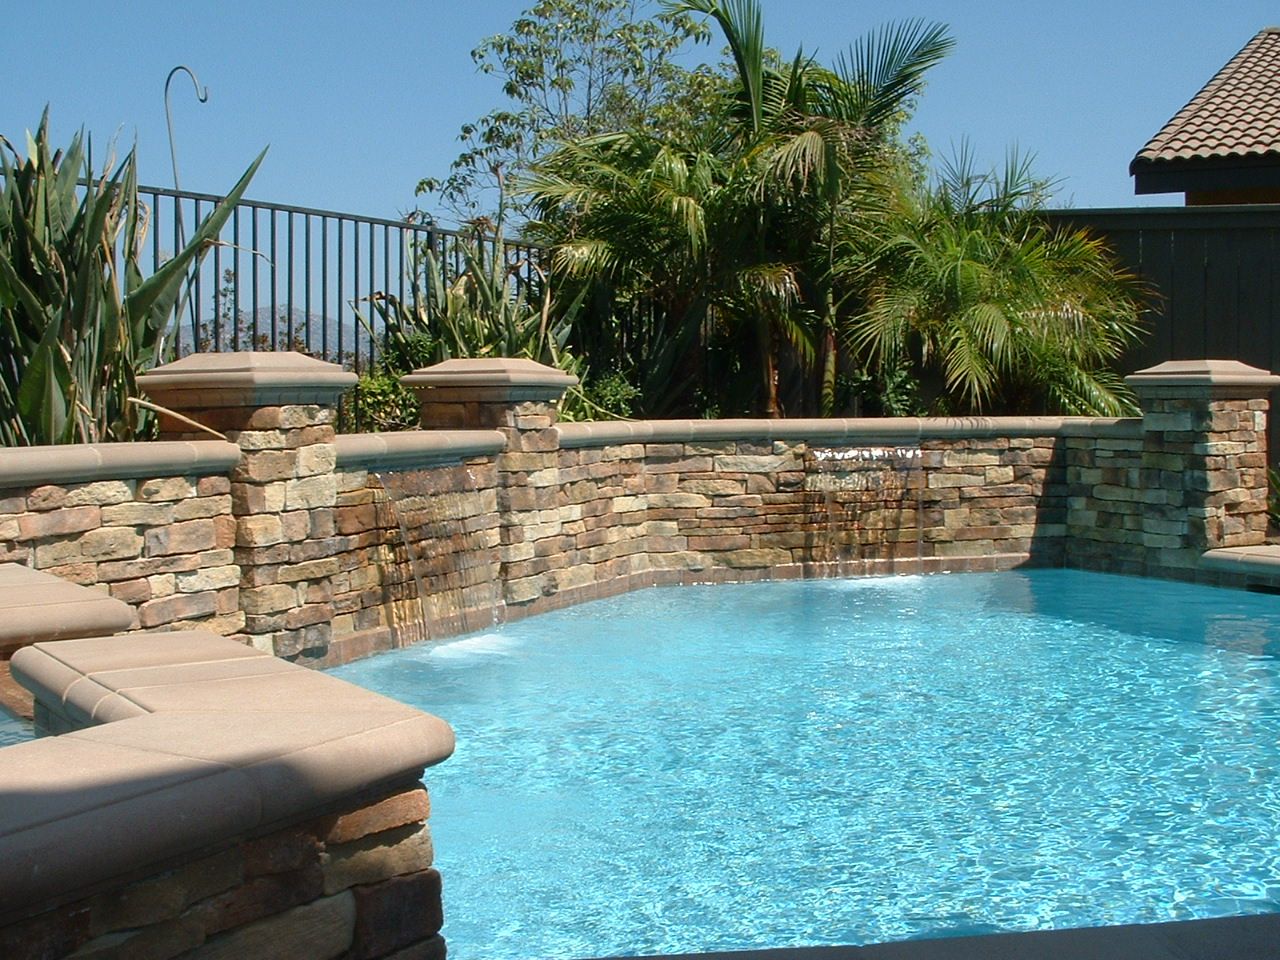 Pools and Spas in Carlsbad, CA - San Diego Dream Pools and Spas